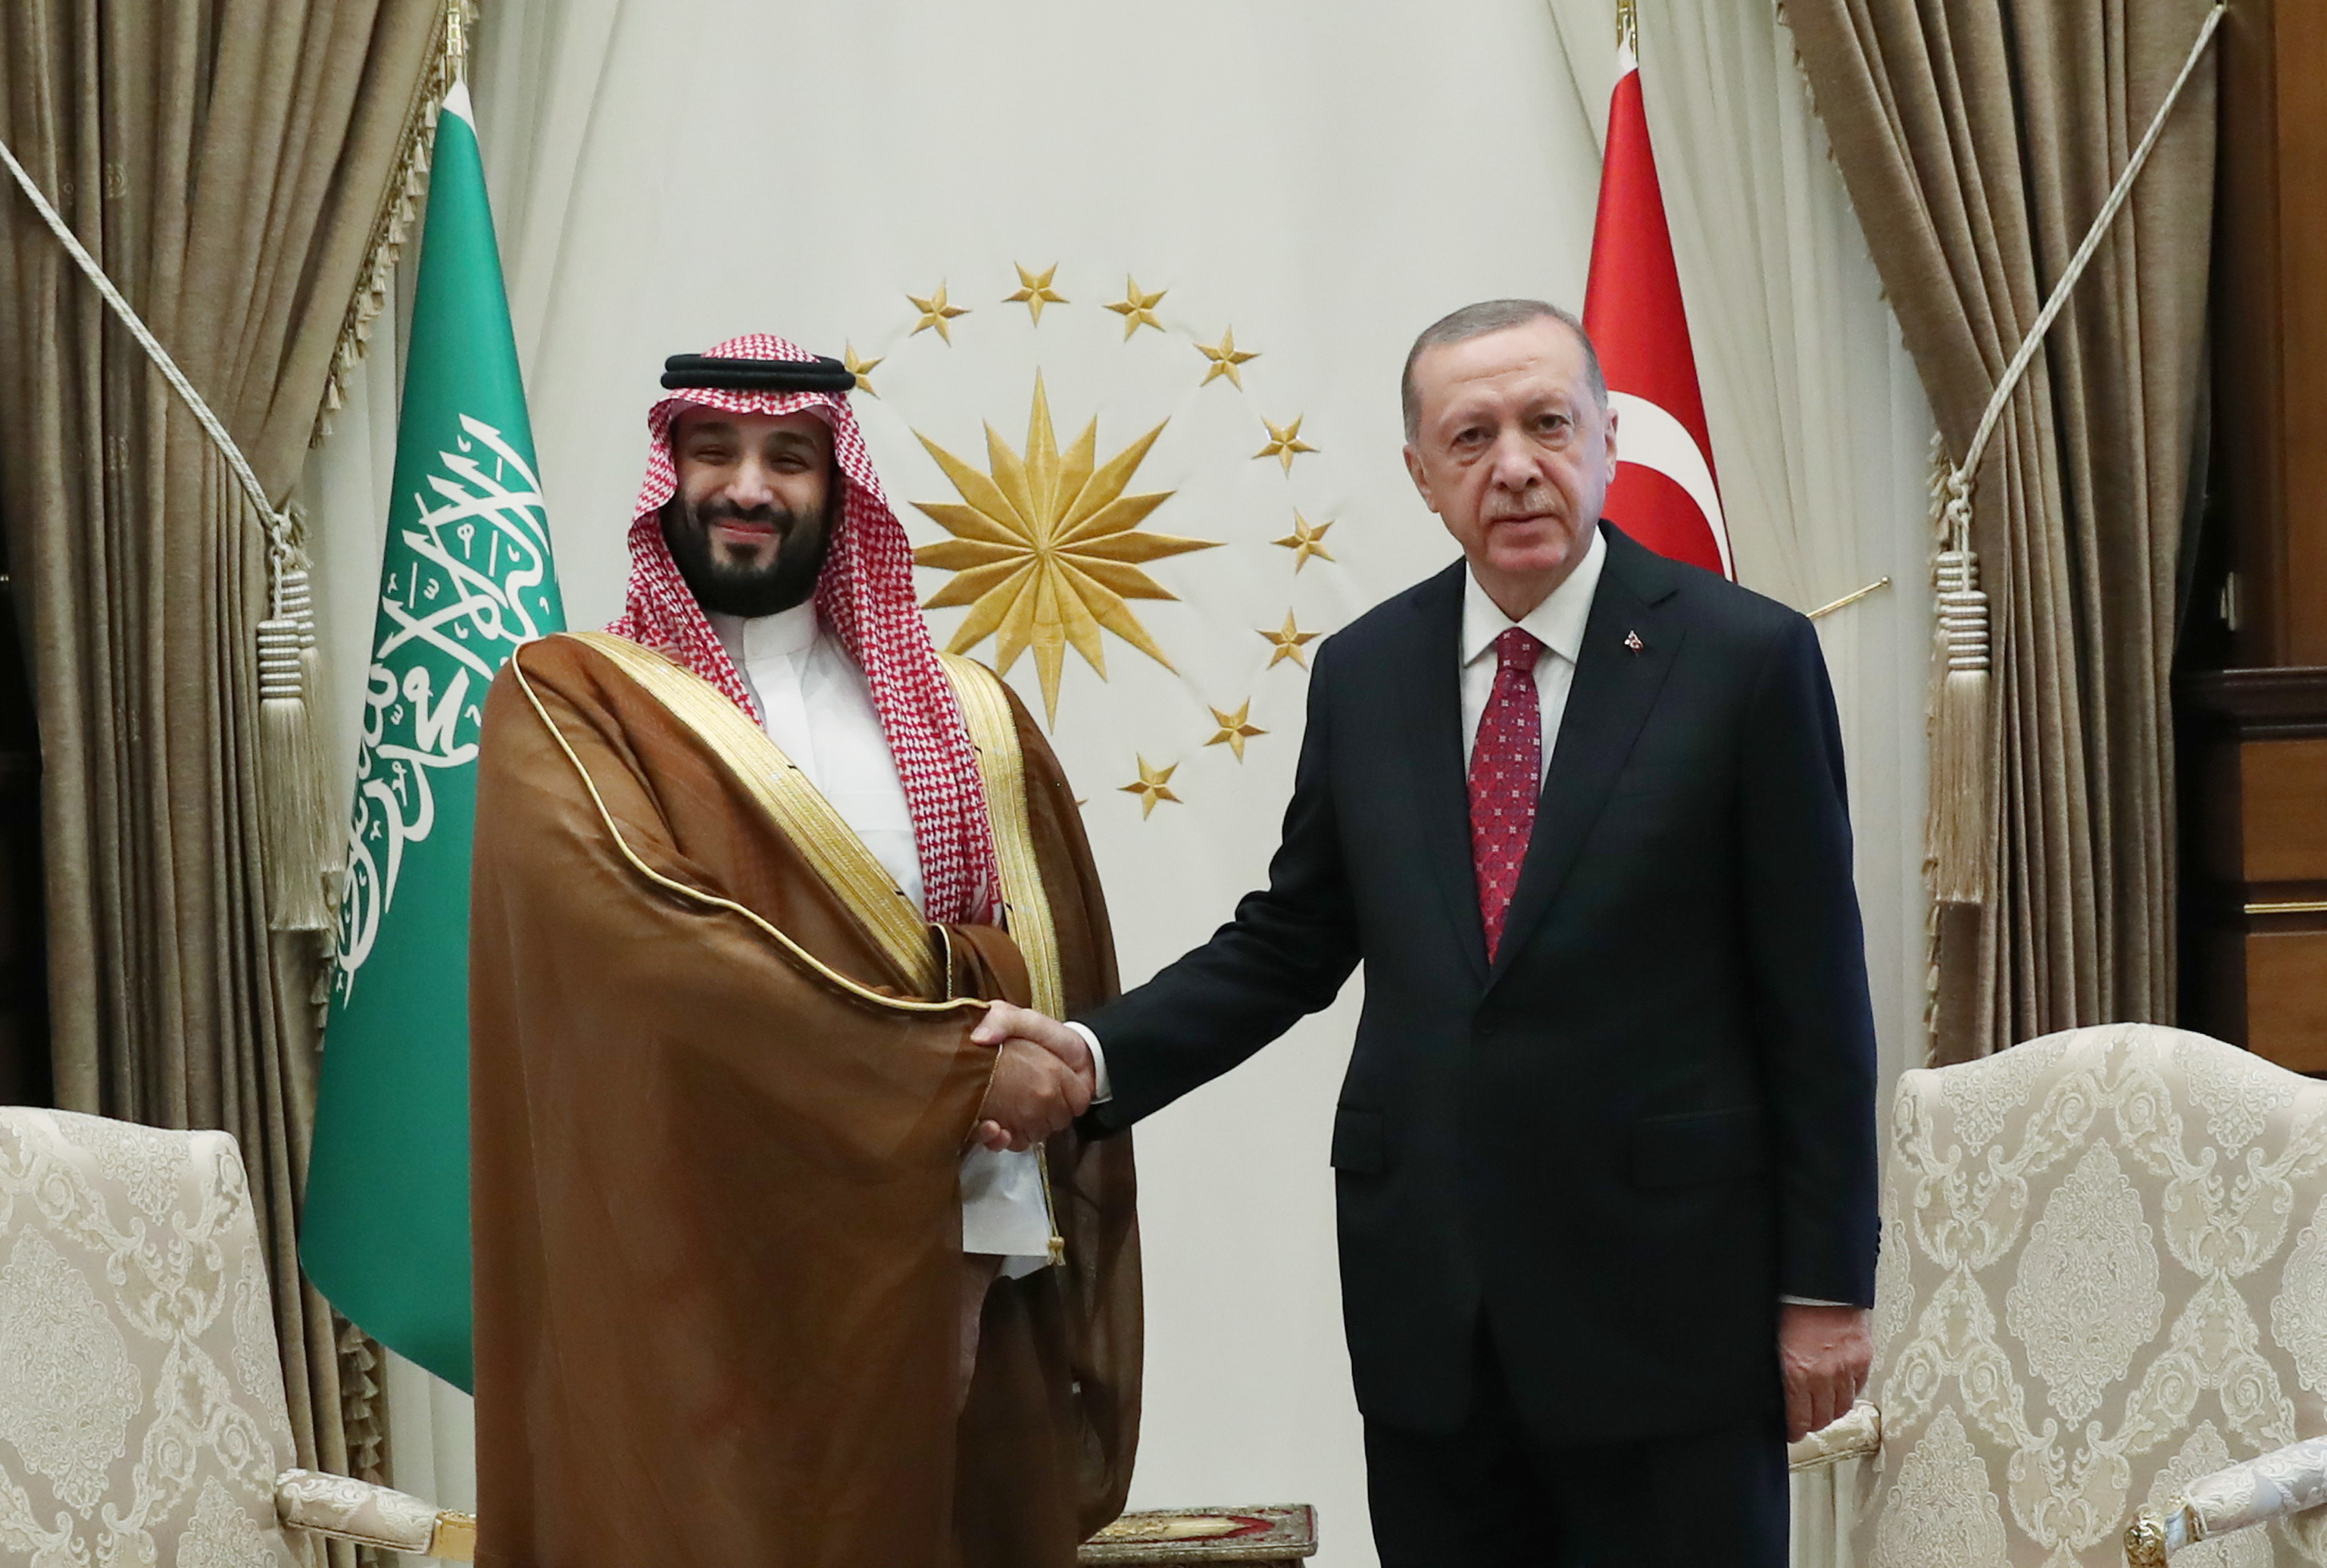 Bin Salman viaja a Turquía, el país donde mataron a Jamal Khashoggi